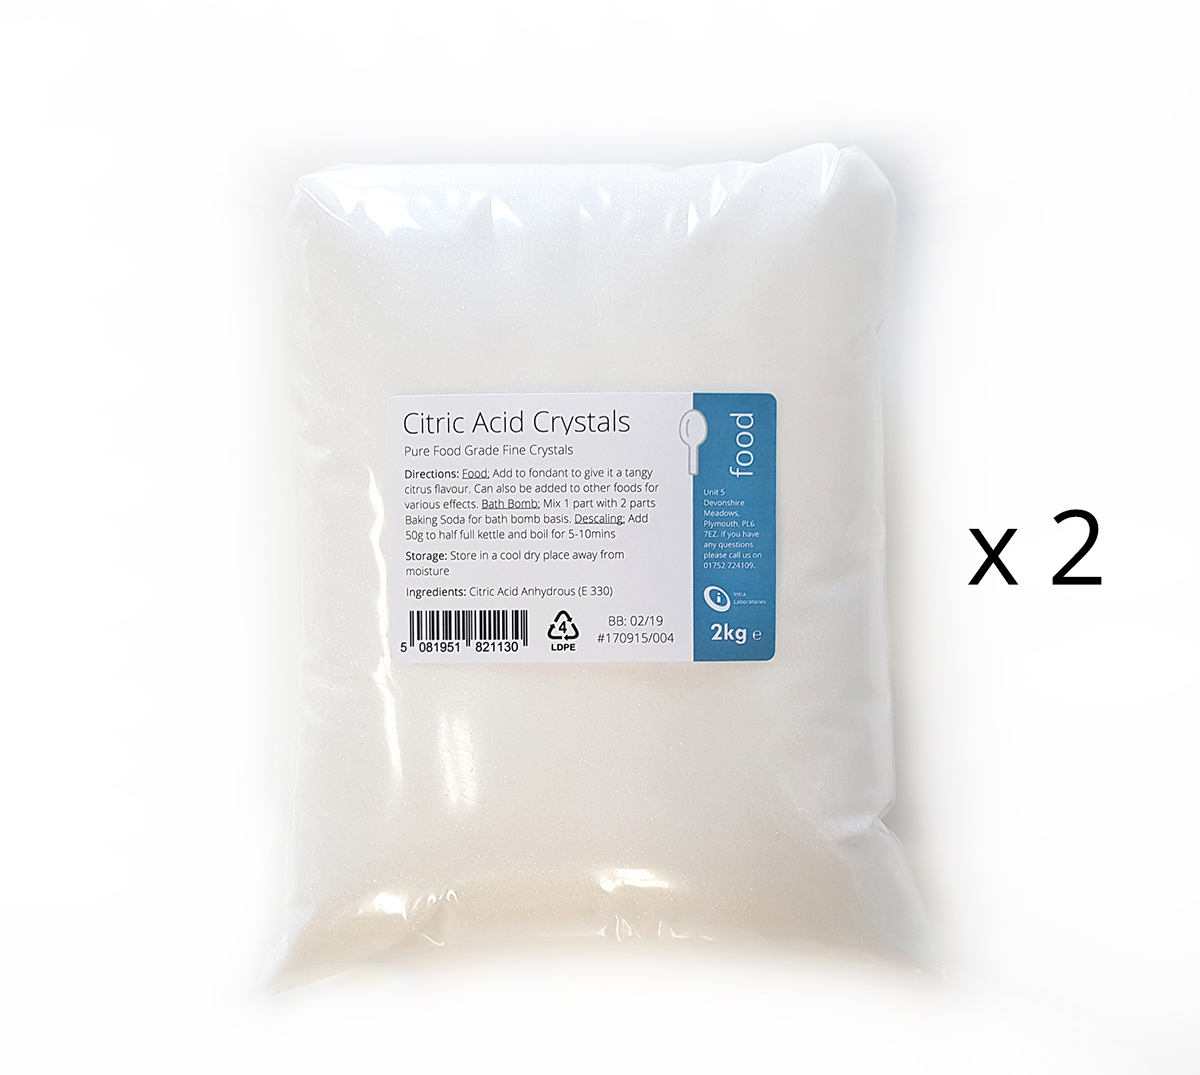 4kg - Citric Acid Crystals